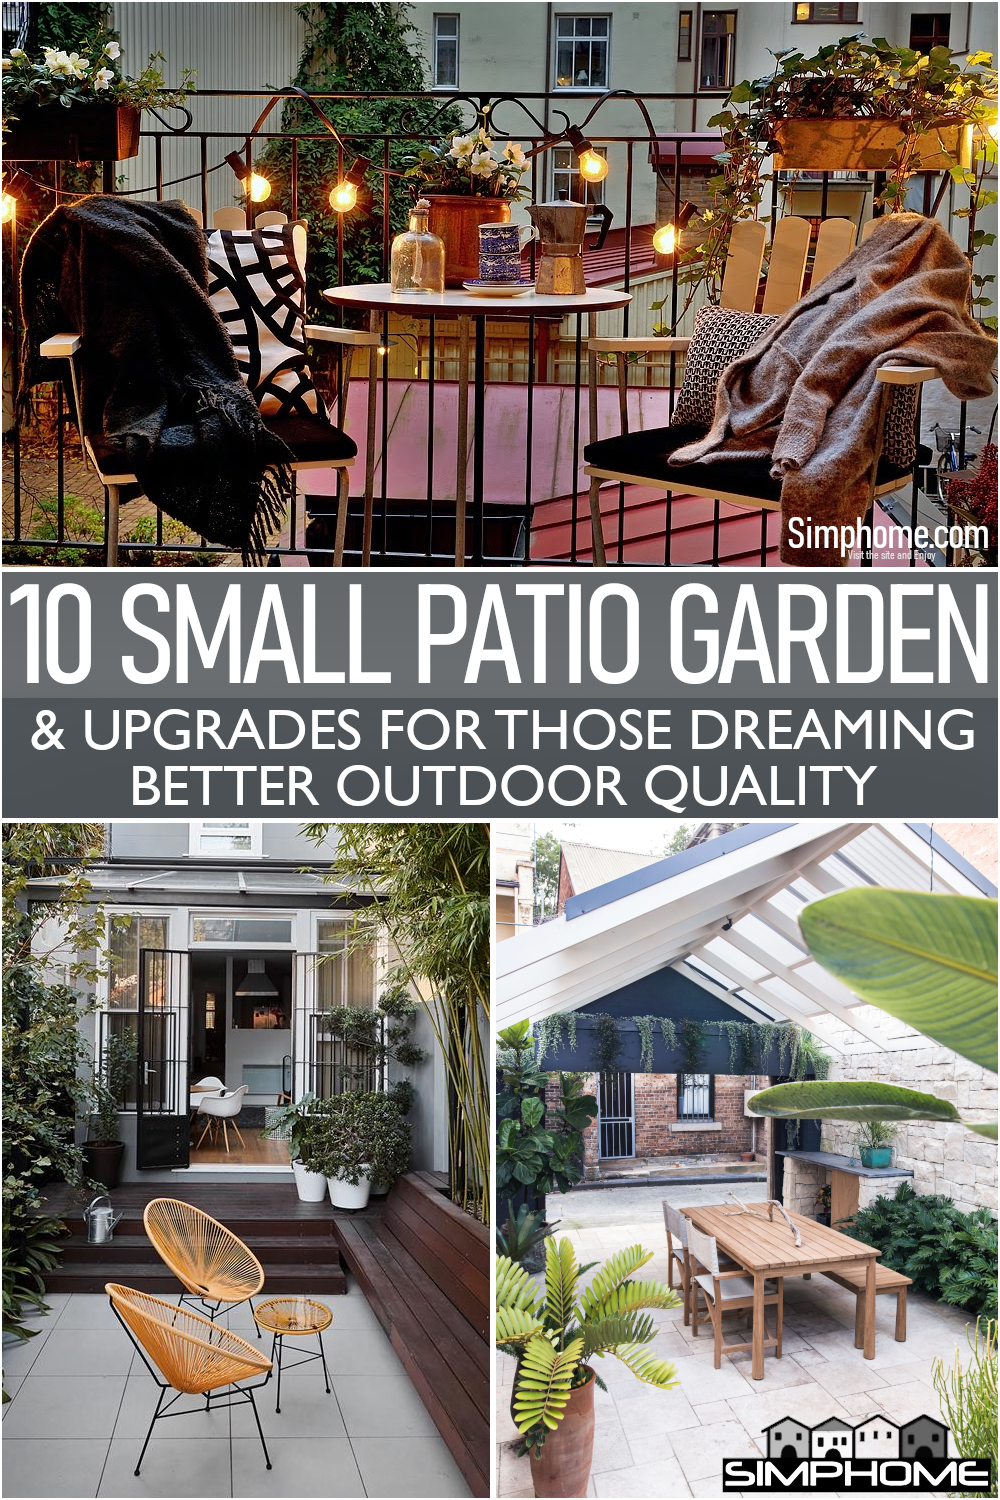 Featured image 10 Small Patio Garden Ideas via Simphome.com